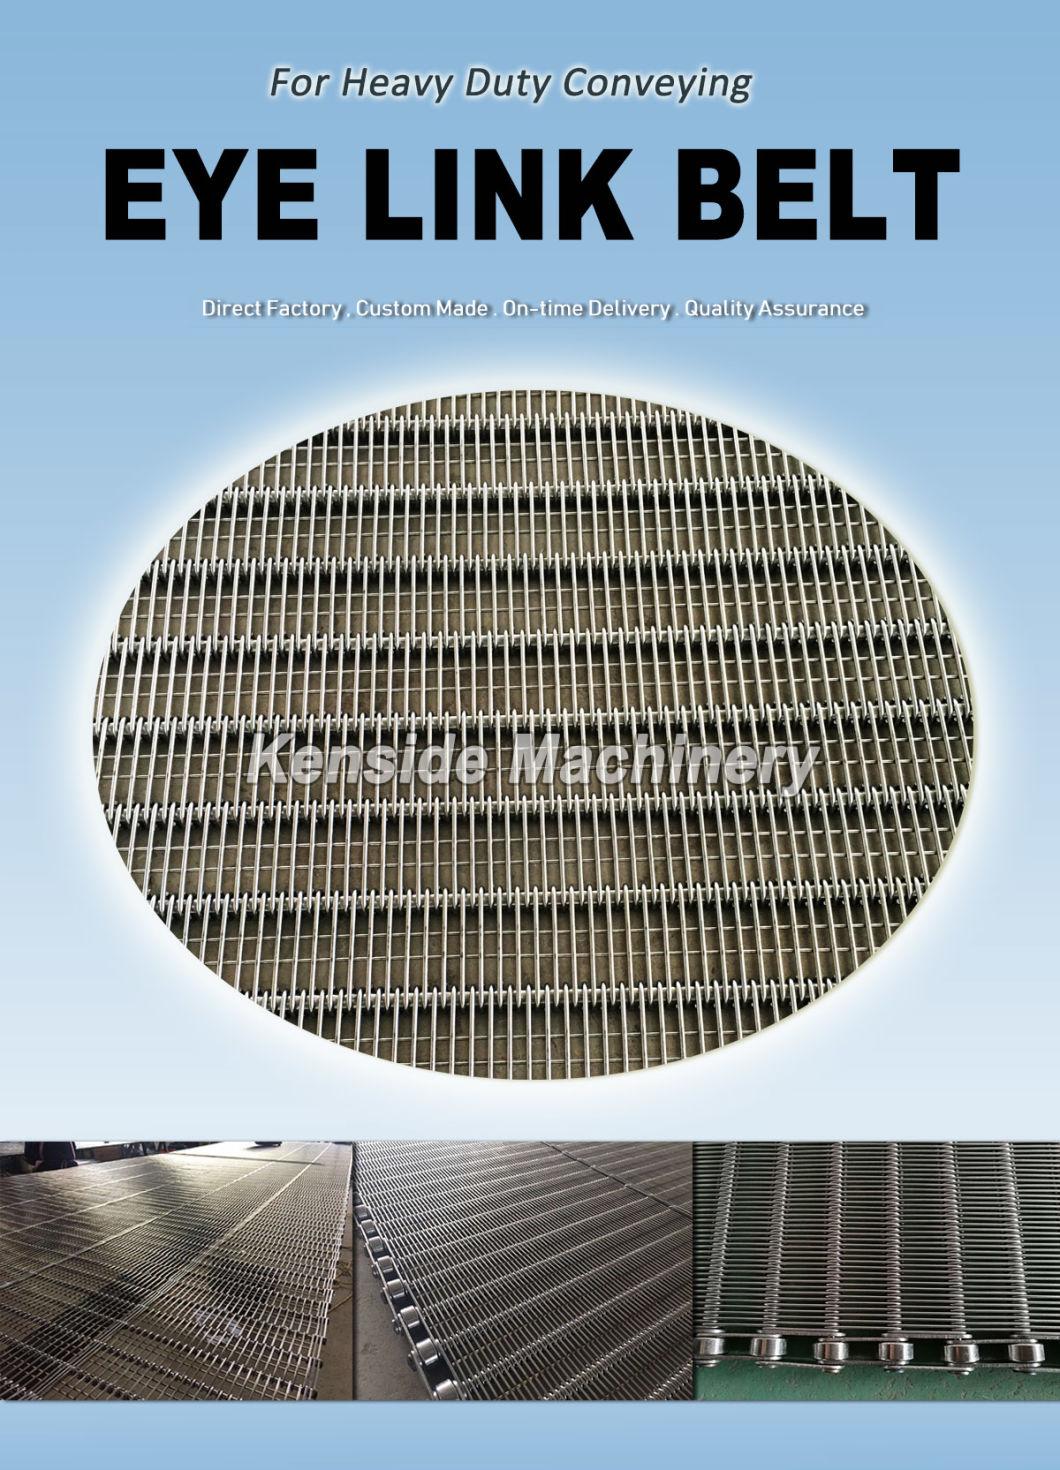 Eye Link Belt for Cooling, Freezing, Pasteurizing